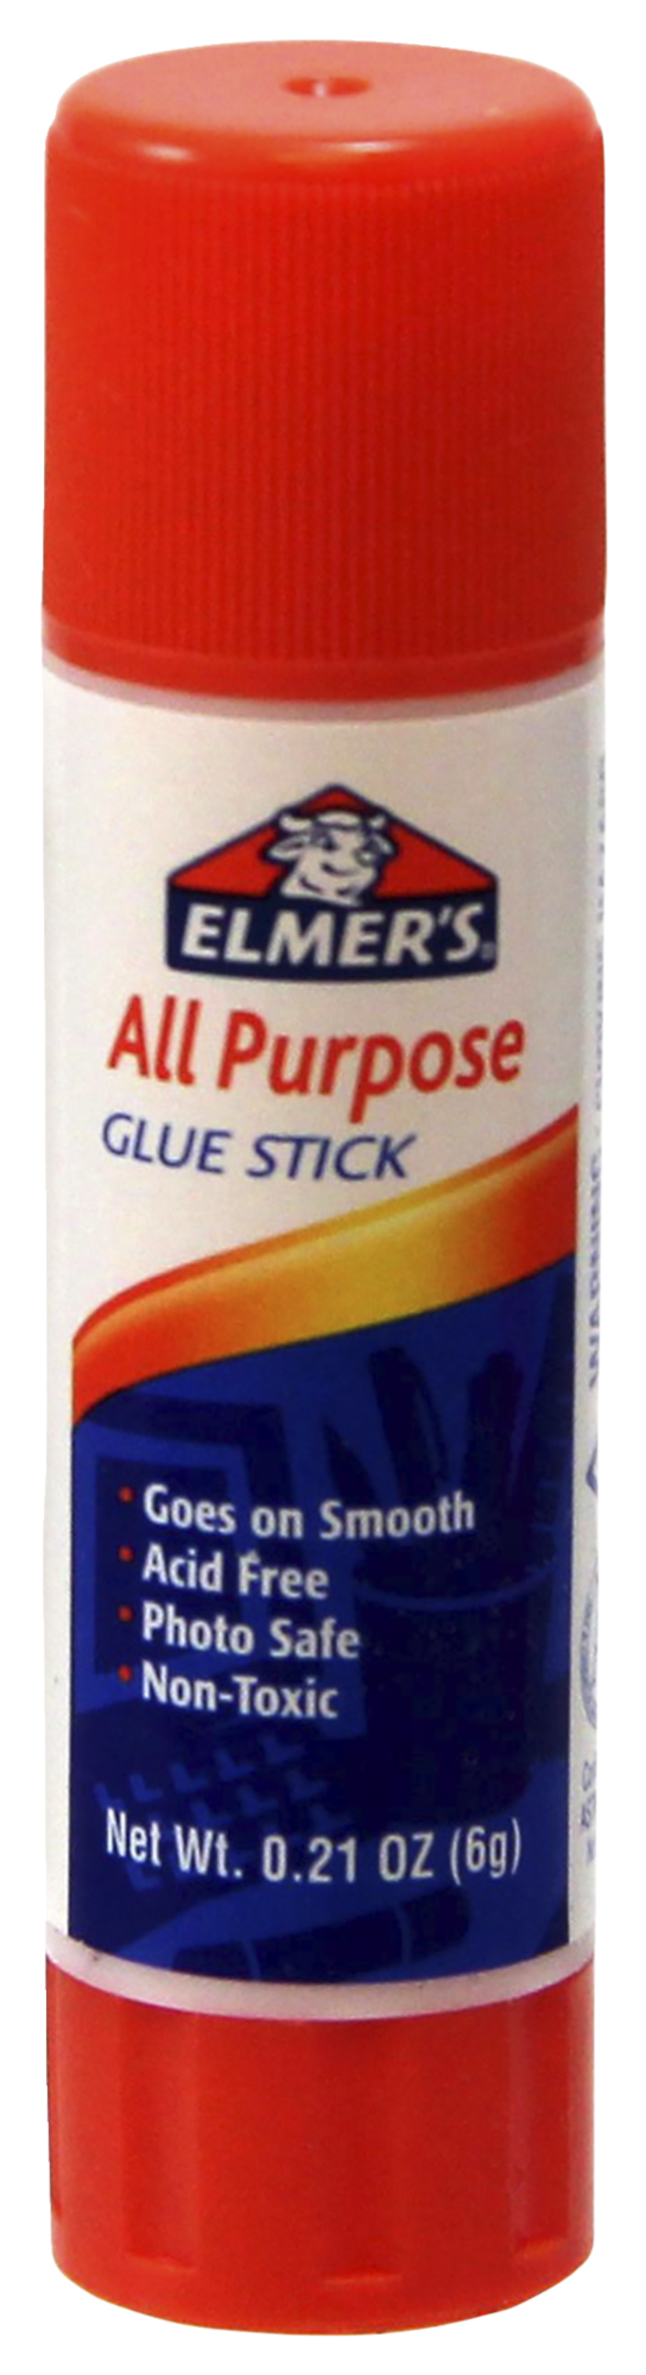 Clear Glue, Item Number 024088